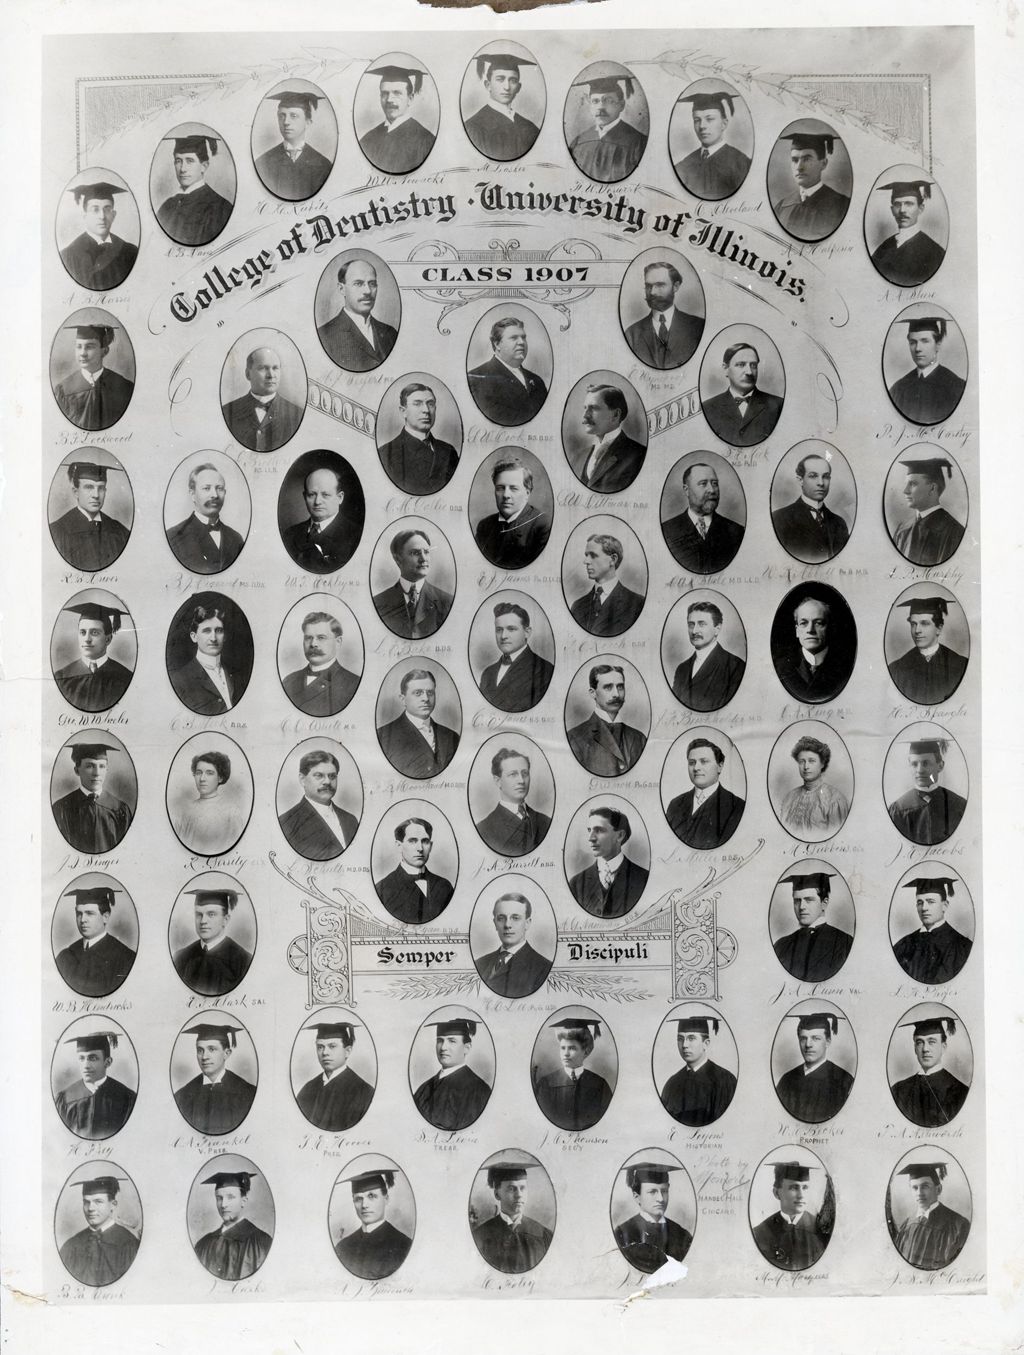 1907 graduating class, University of Illinois College of Dentistry